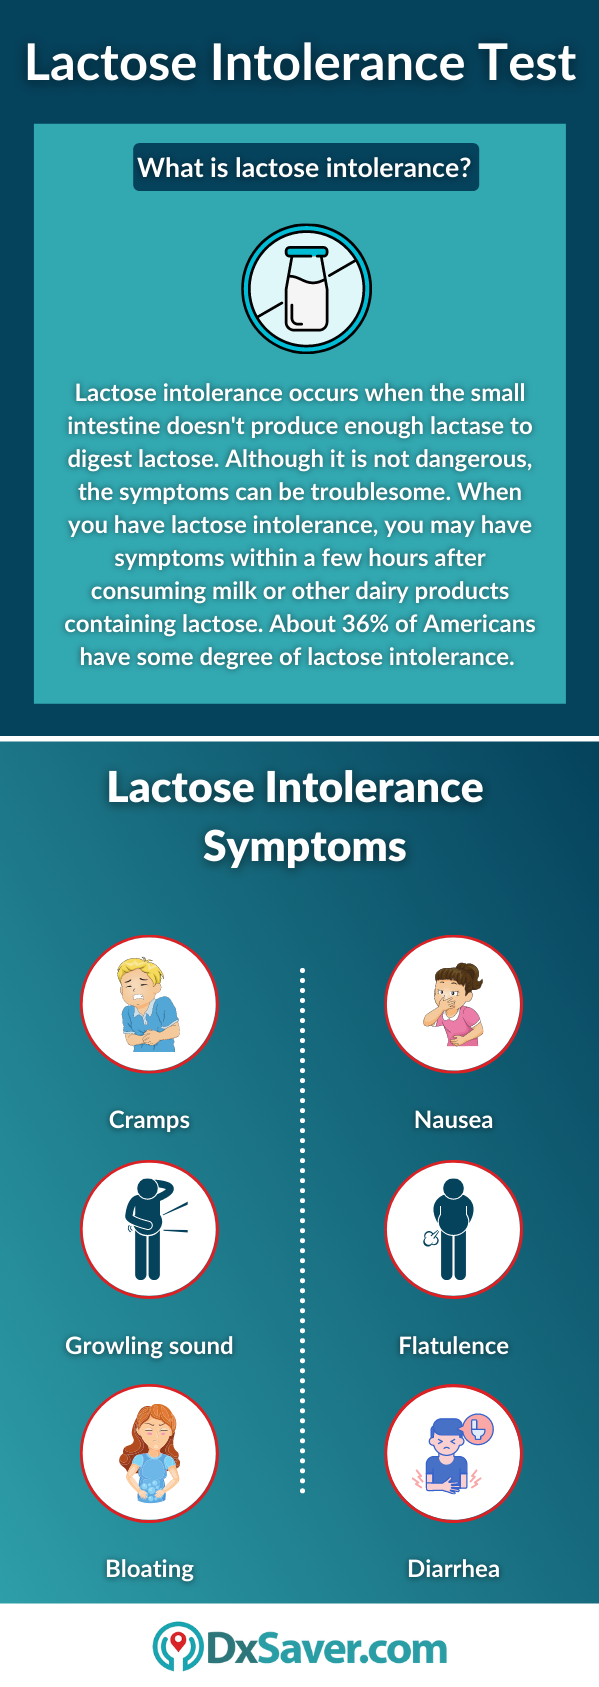 Lactose Intolerance and Symptoms